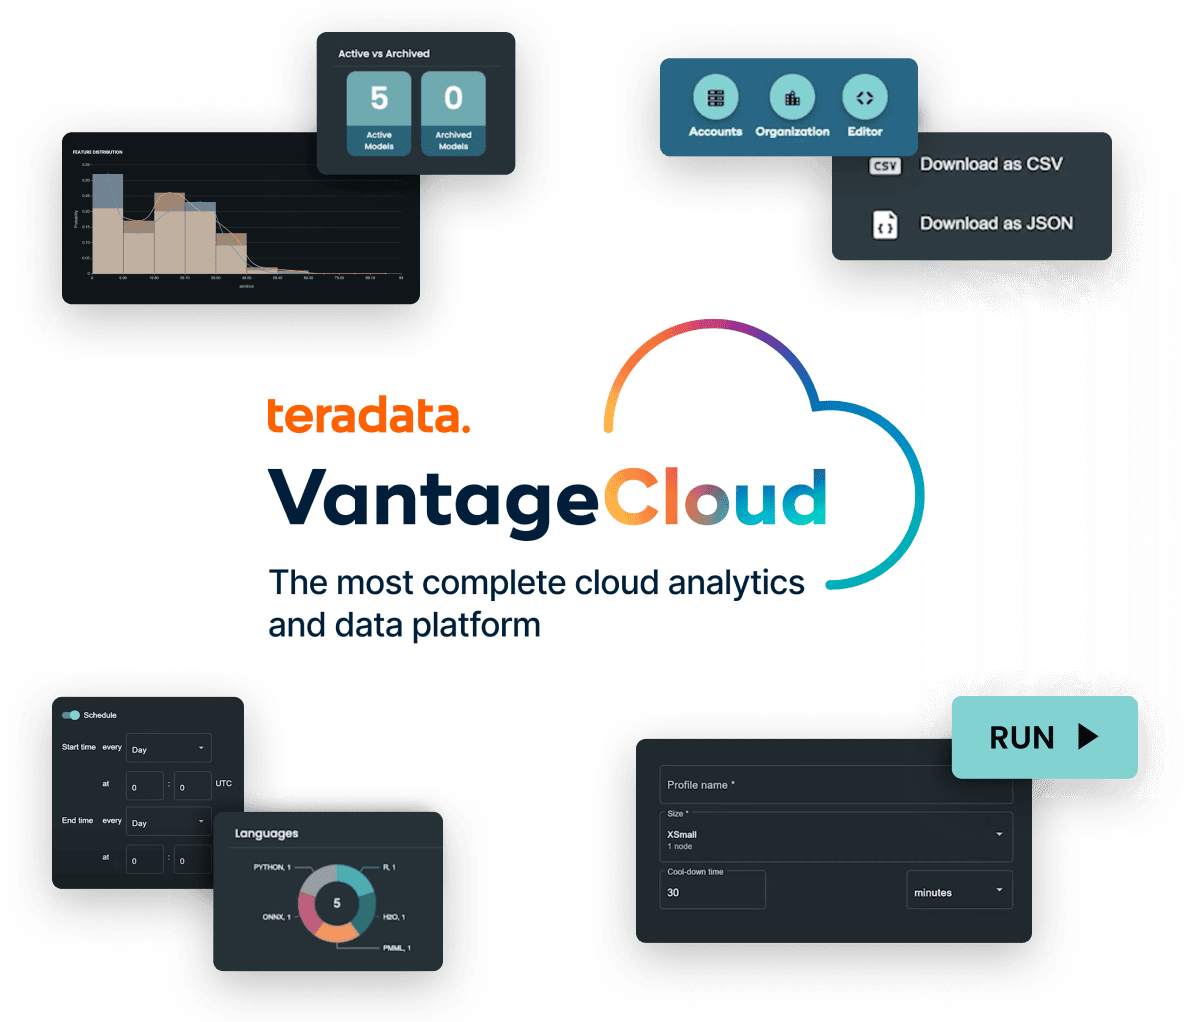 Teradata VantageCloud: The most complete cloud analytics and data platform.